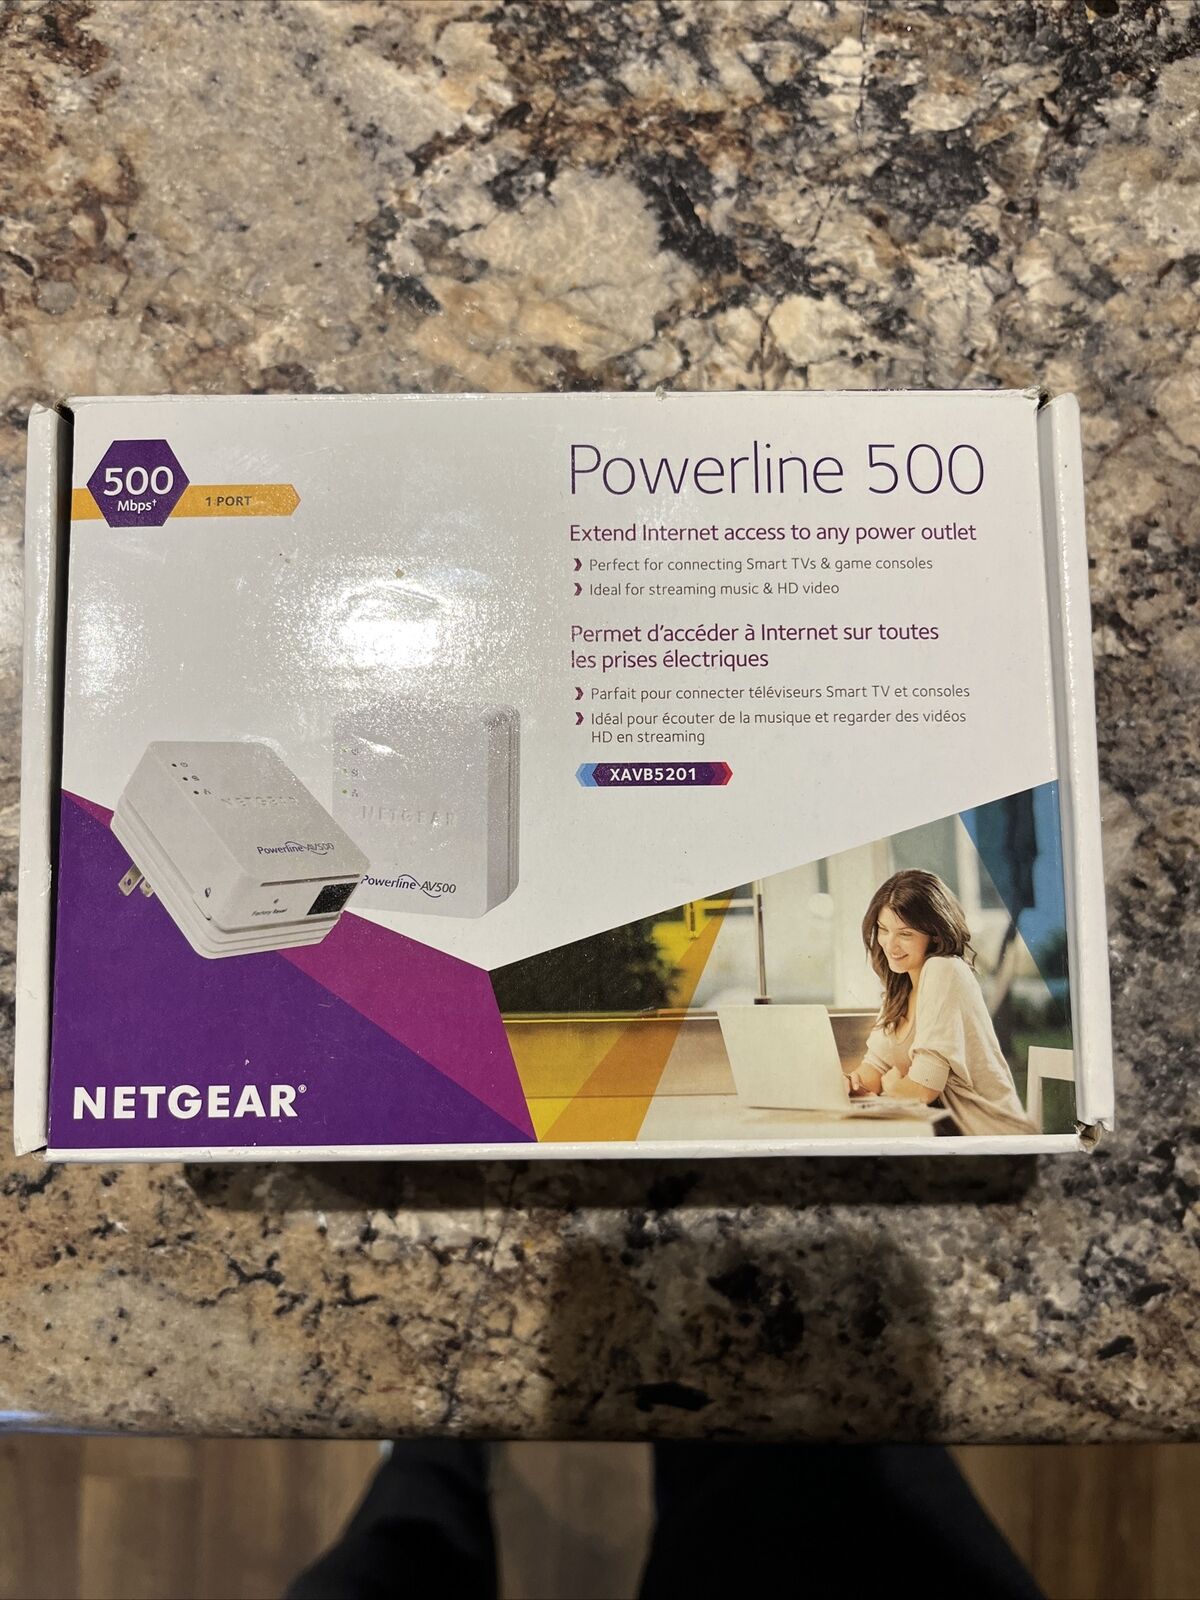 Netgear Powerline 500 XAVB5201 Extend Internet Access Outlet 500 Mbps